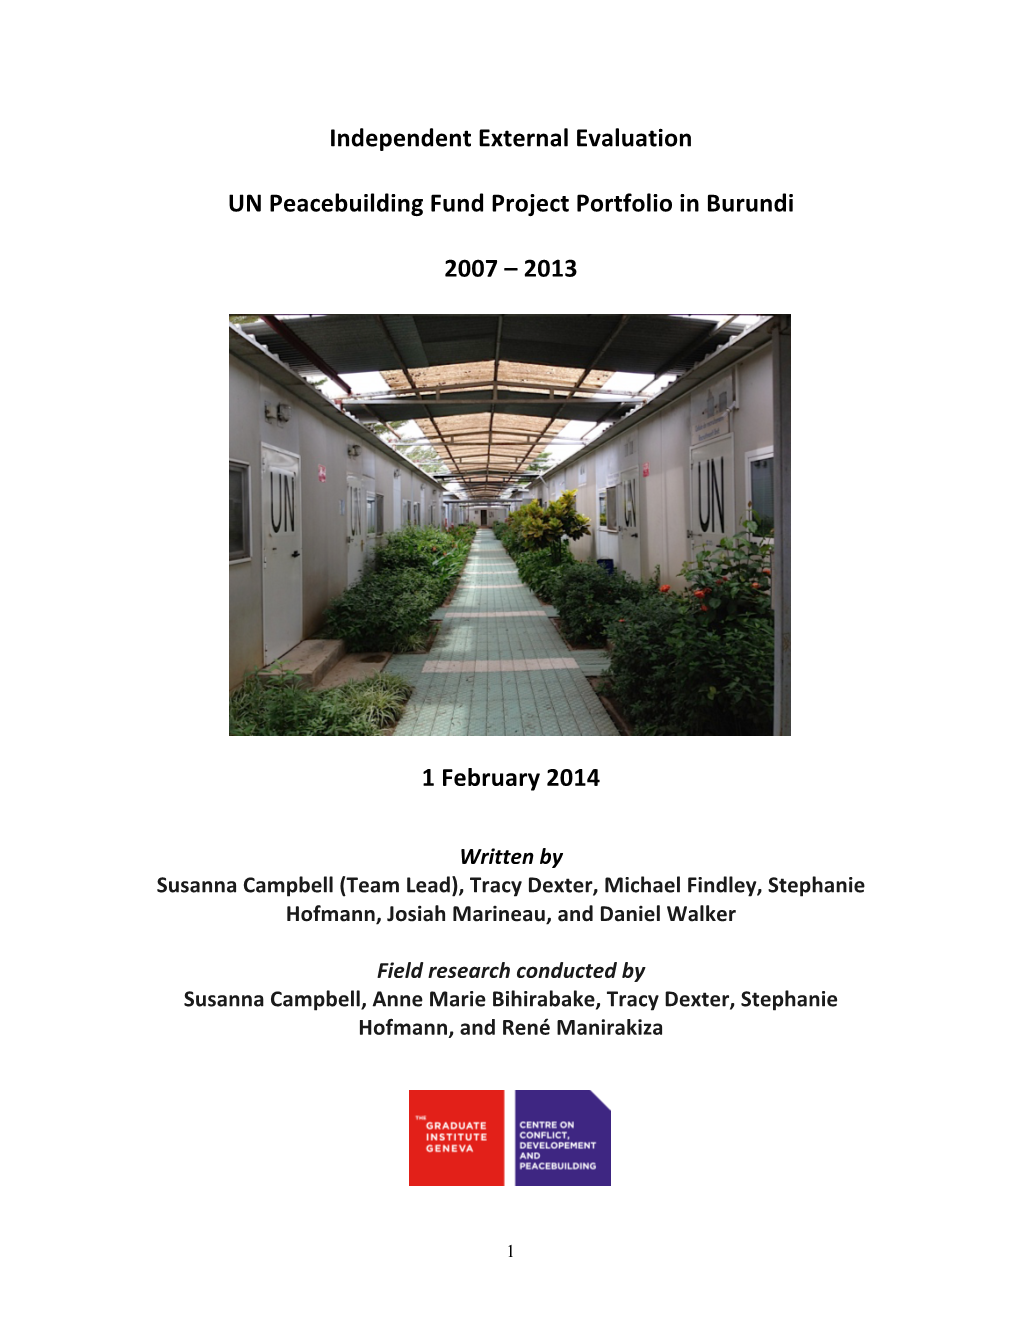 Independent External Evaluation UN Peacebuilding Fund Project Portfolio in Burundi